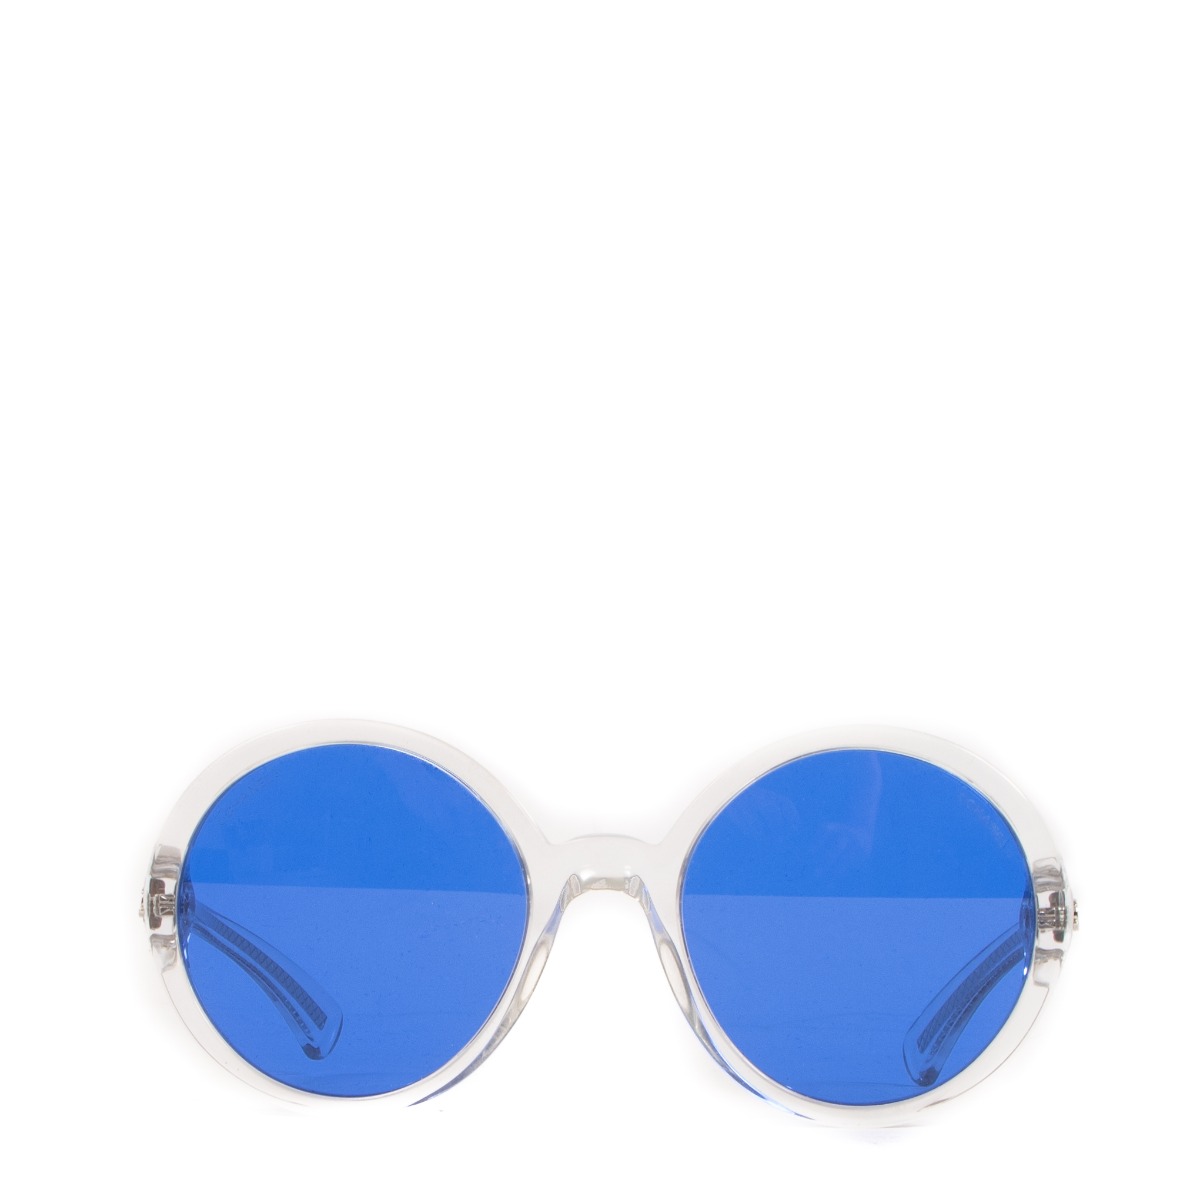 Chanel Blue Round Sunglasses